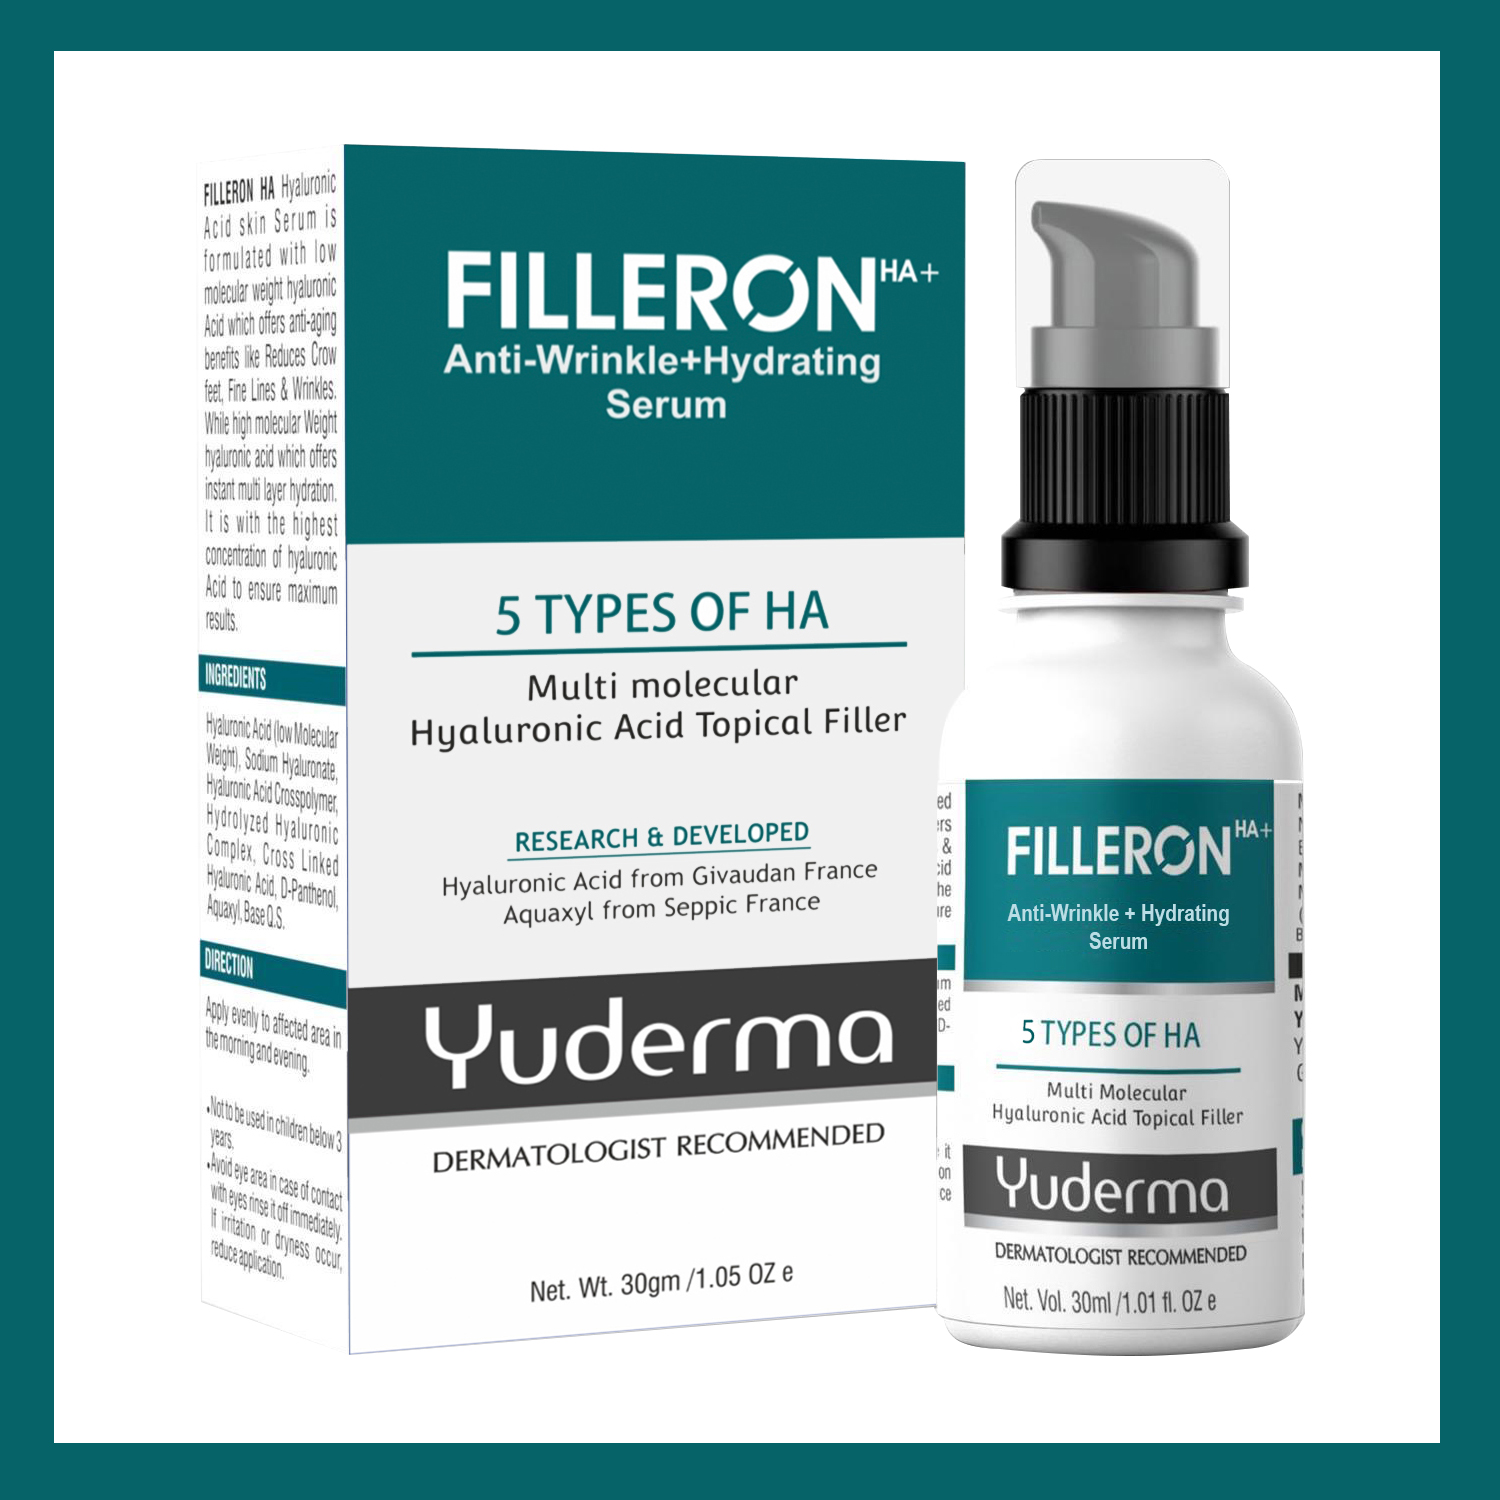 FILLERON HA Anti-wrinkle + Hydrating Serum